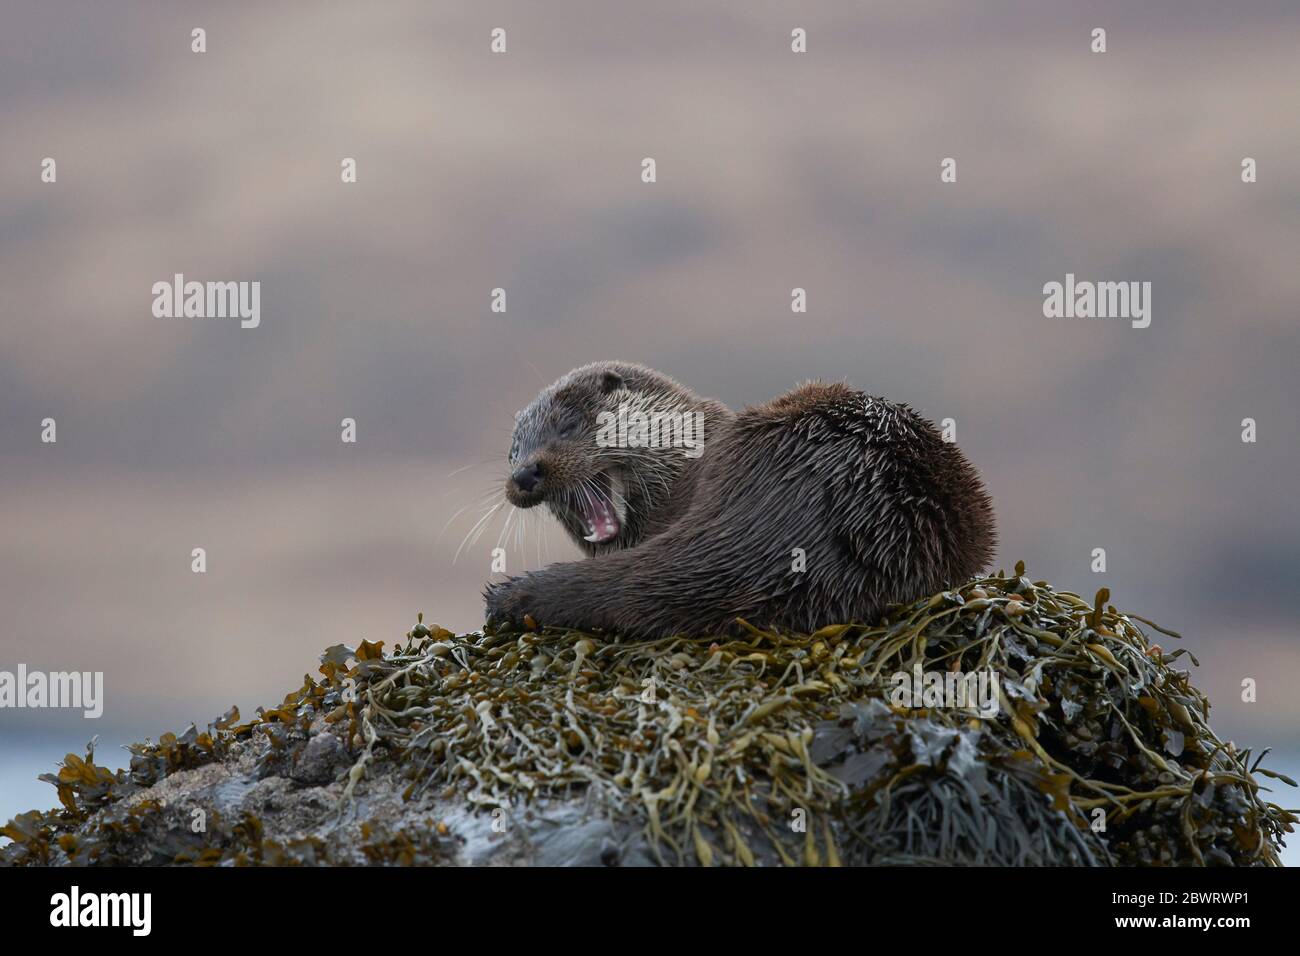 European otter (Lutra lutra) UK Stock Photo